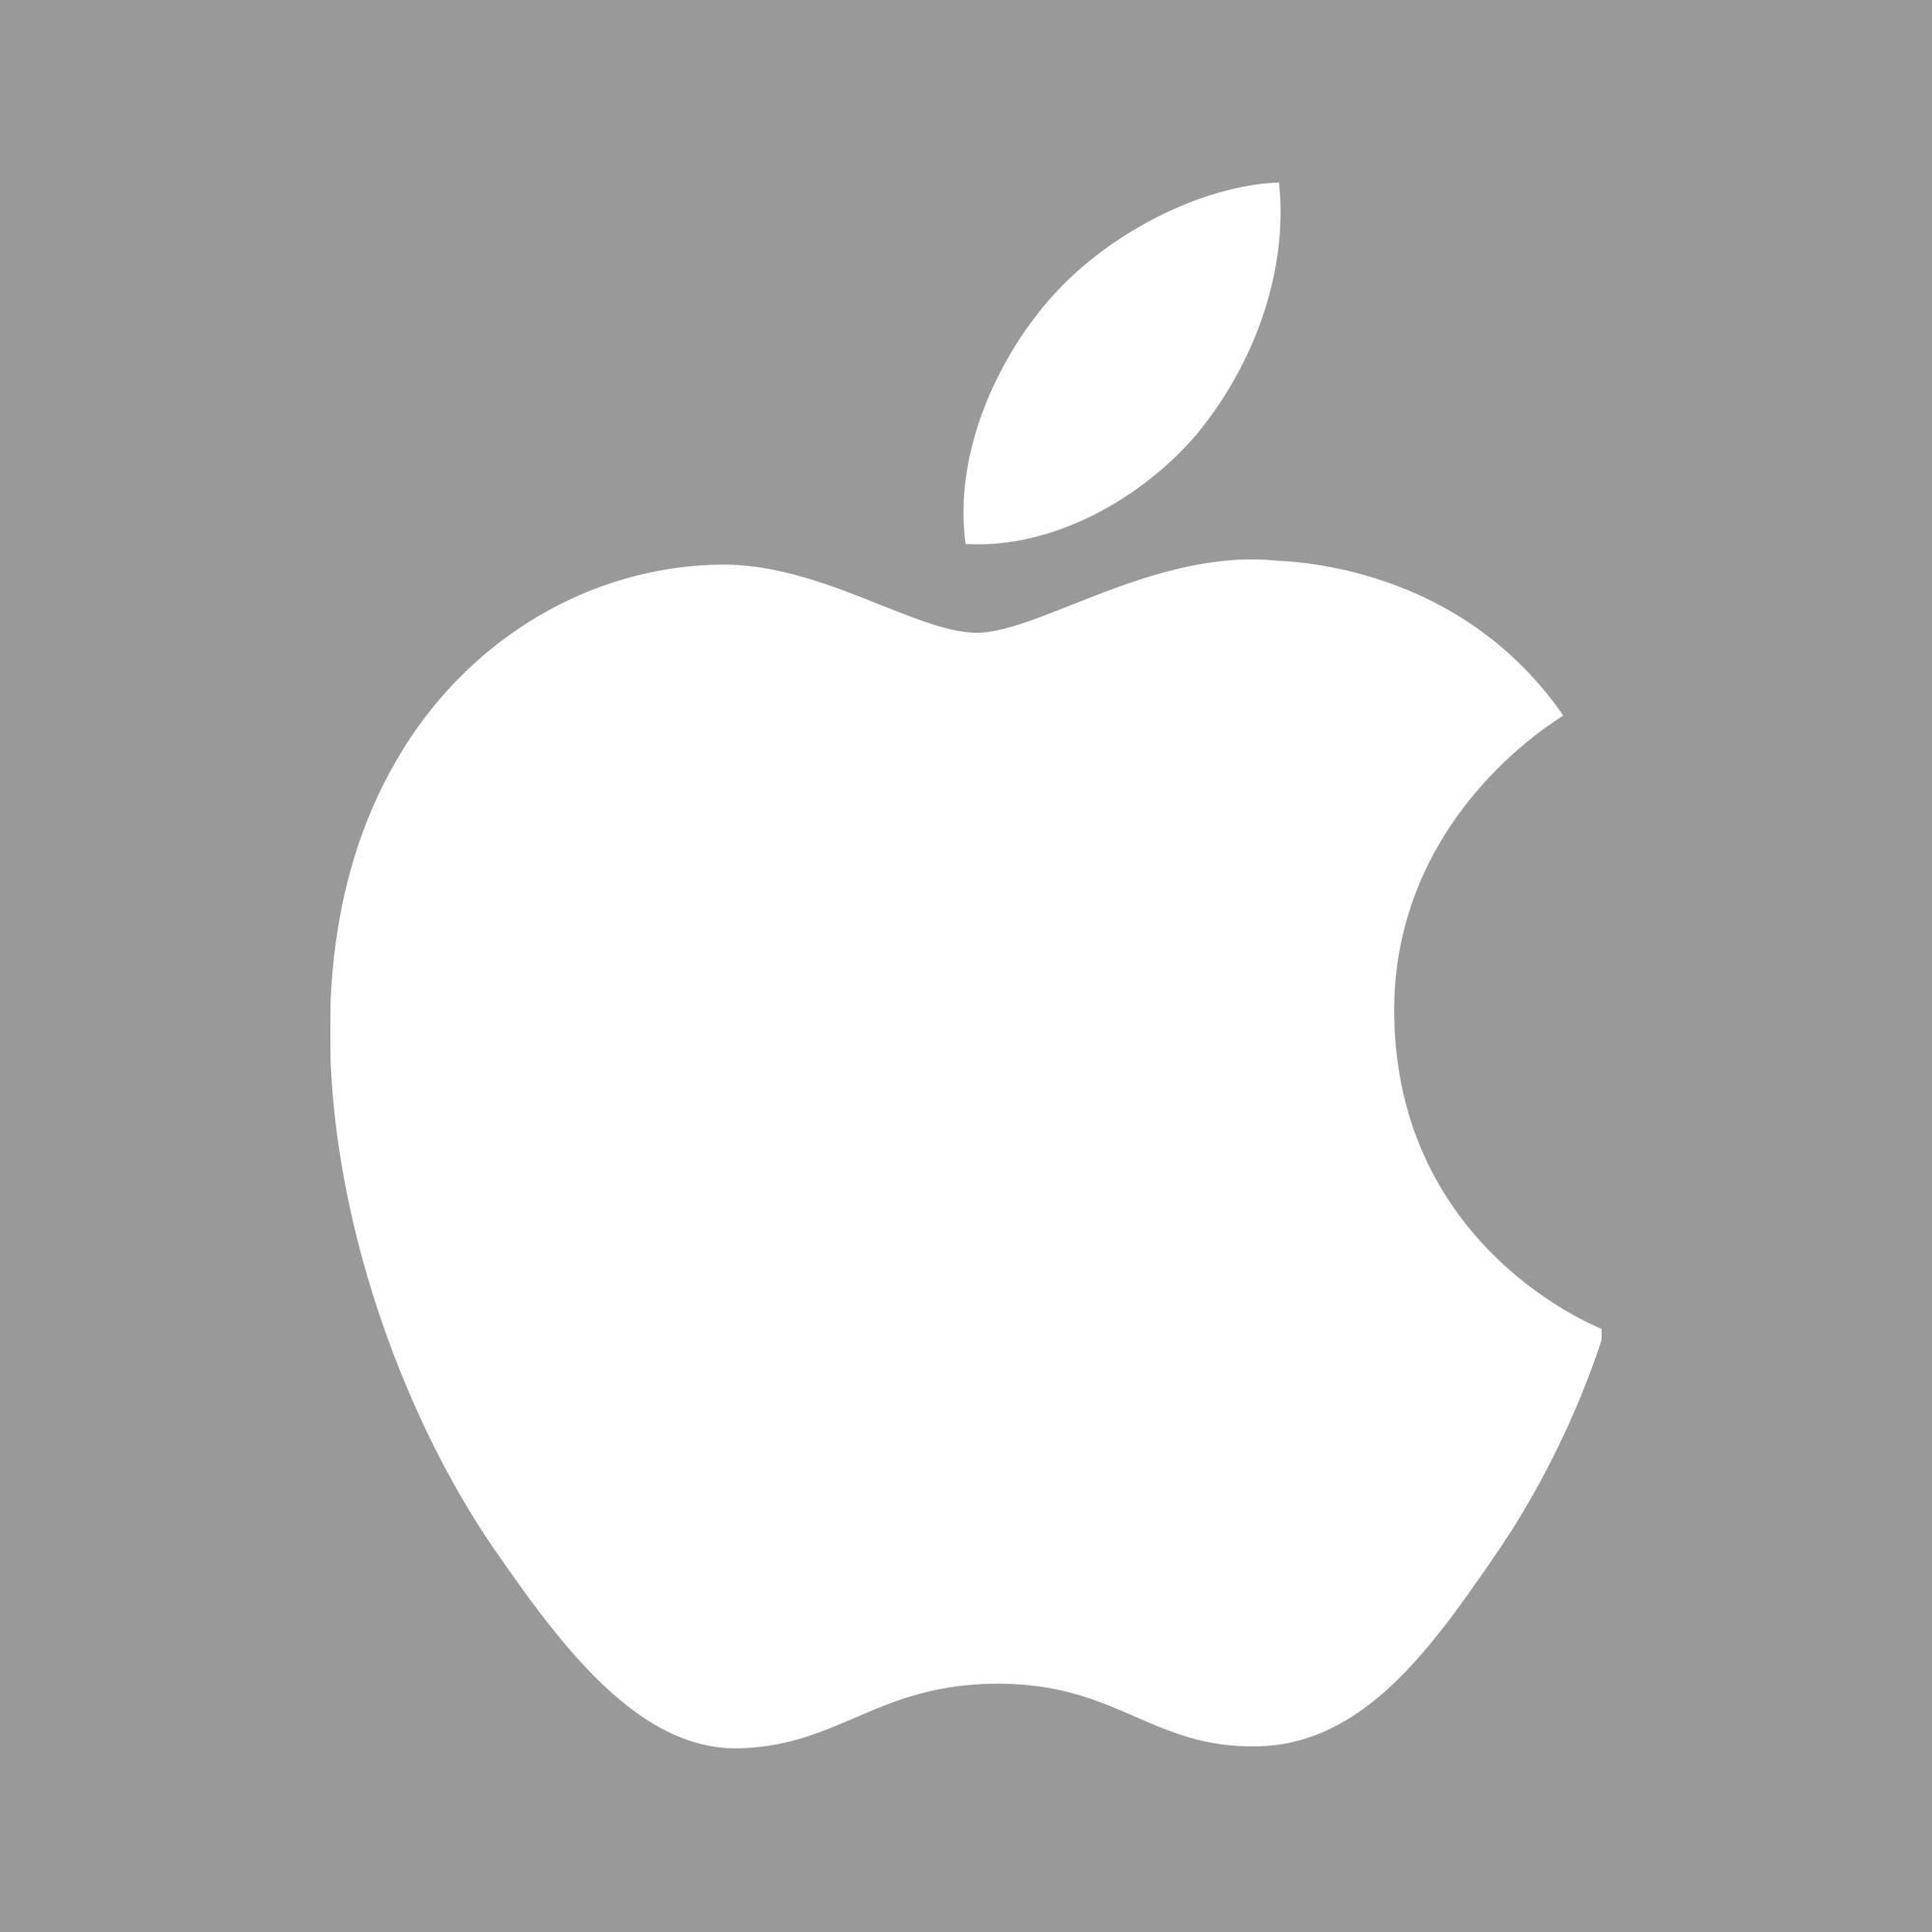 Square Apple Logo - File:Apple gray logo.png - Wikimedia Commons